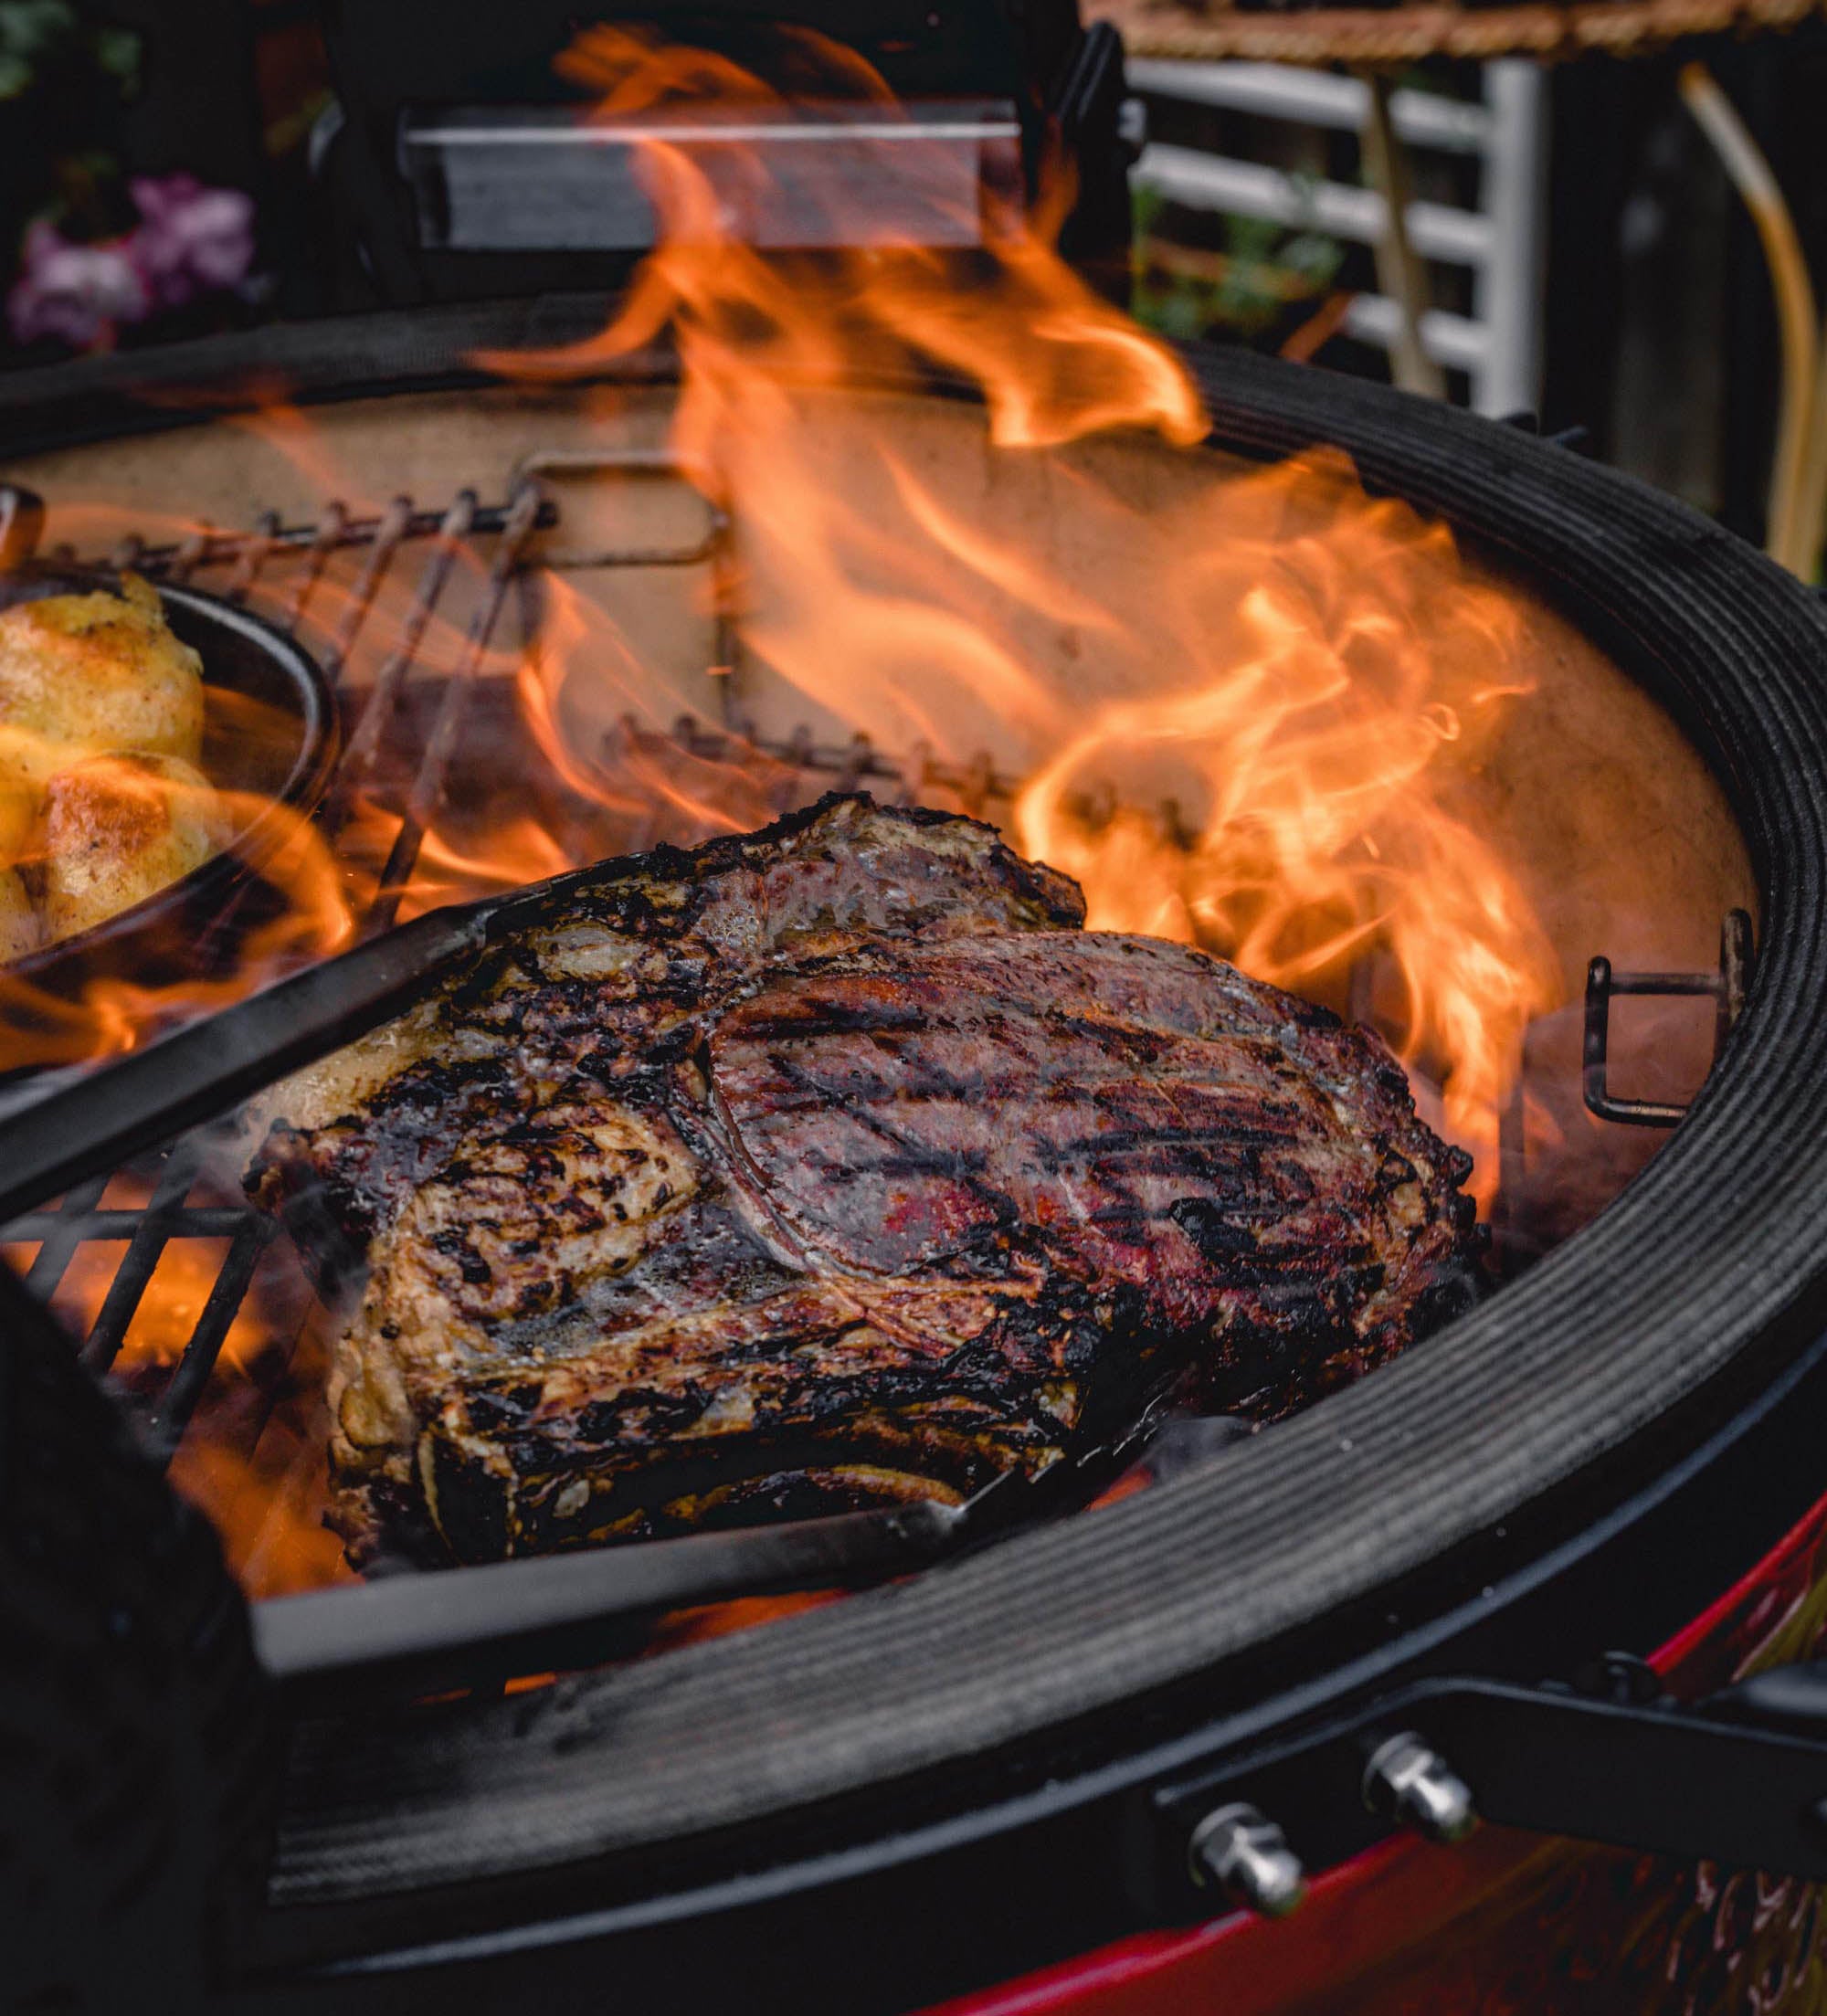 Steak on a barbecue